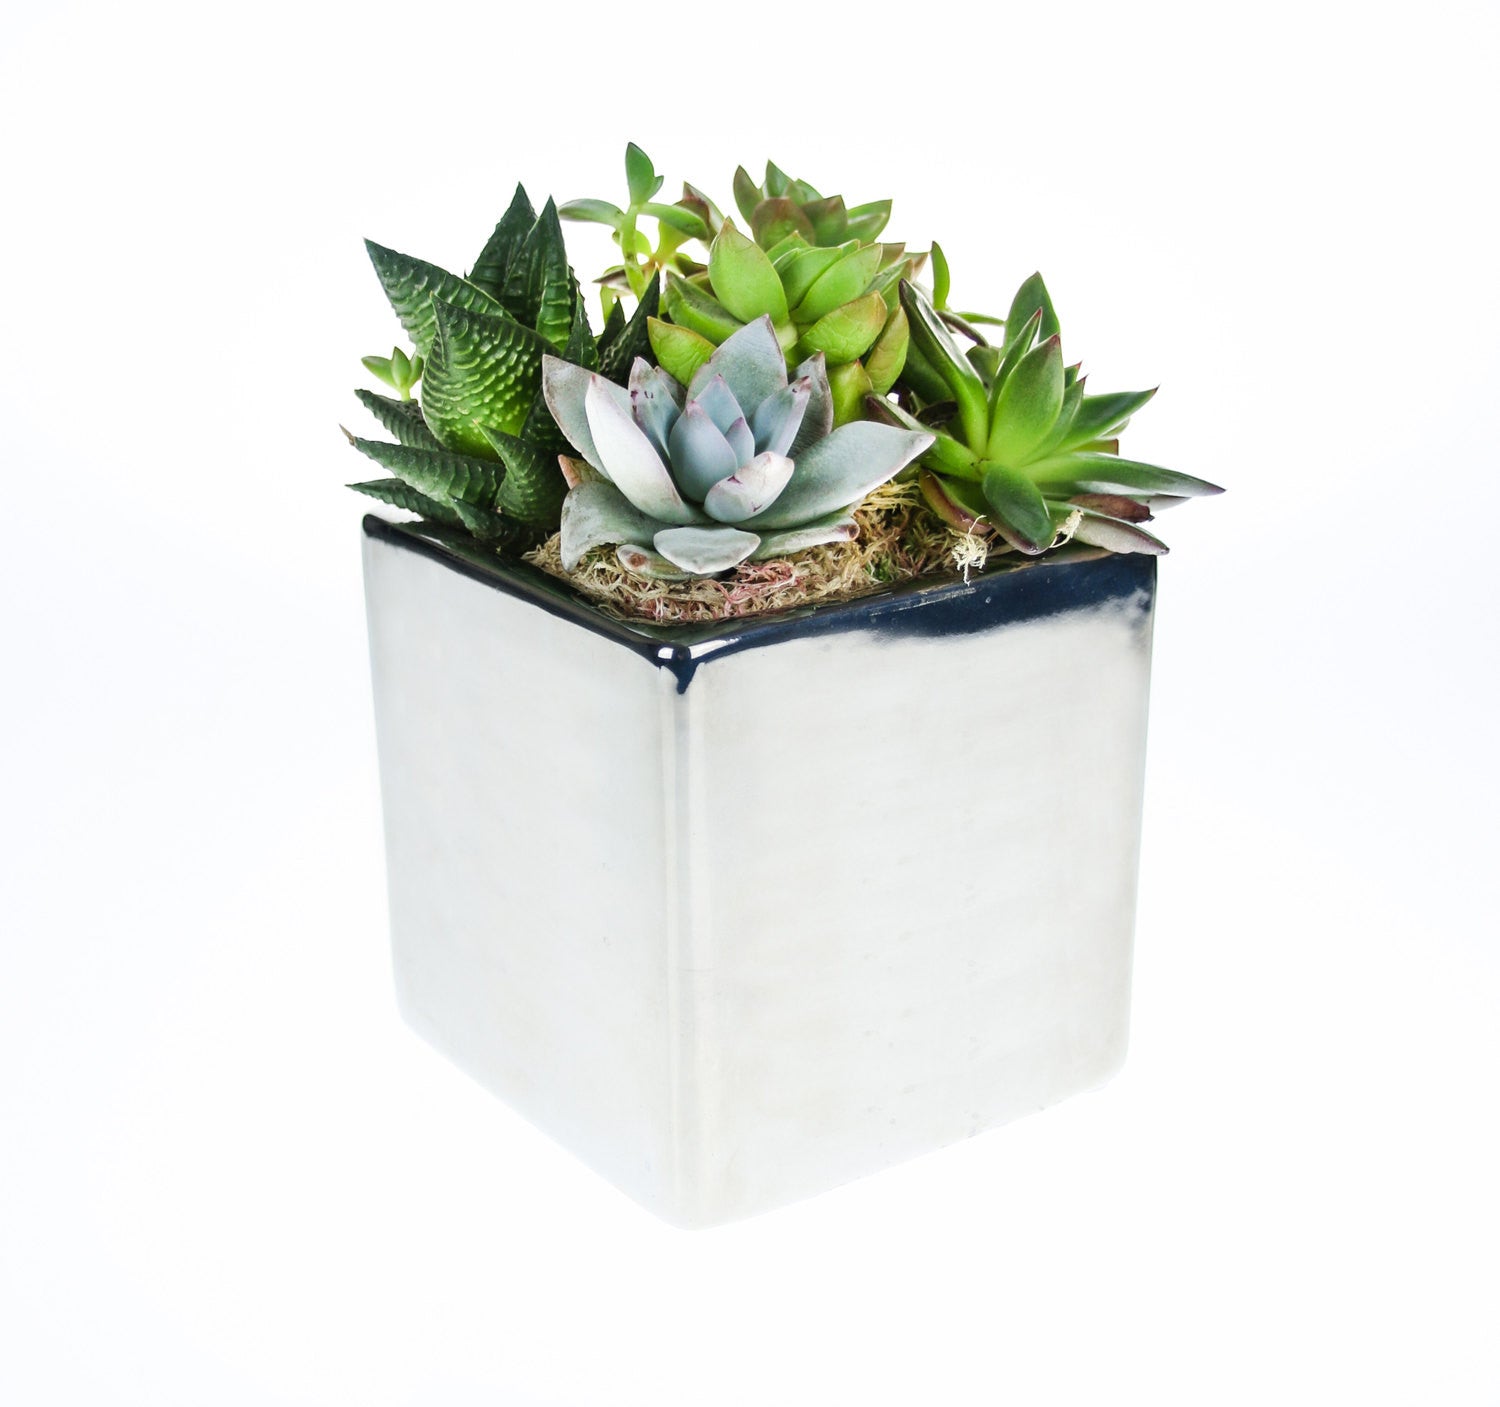 Mirror cube planted succulent arrangement